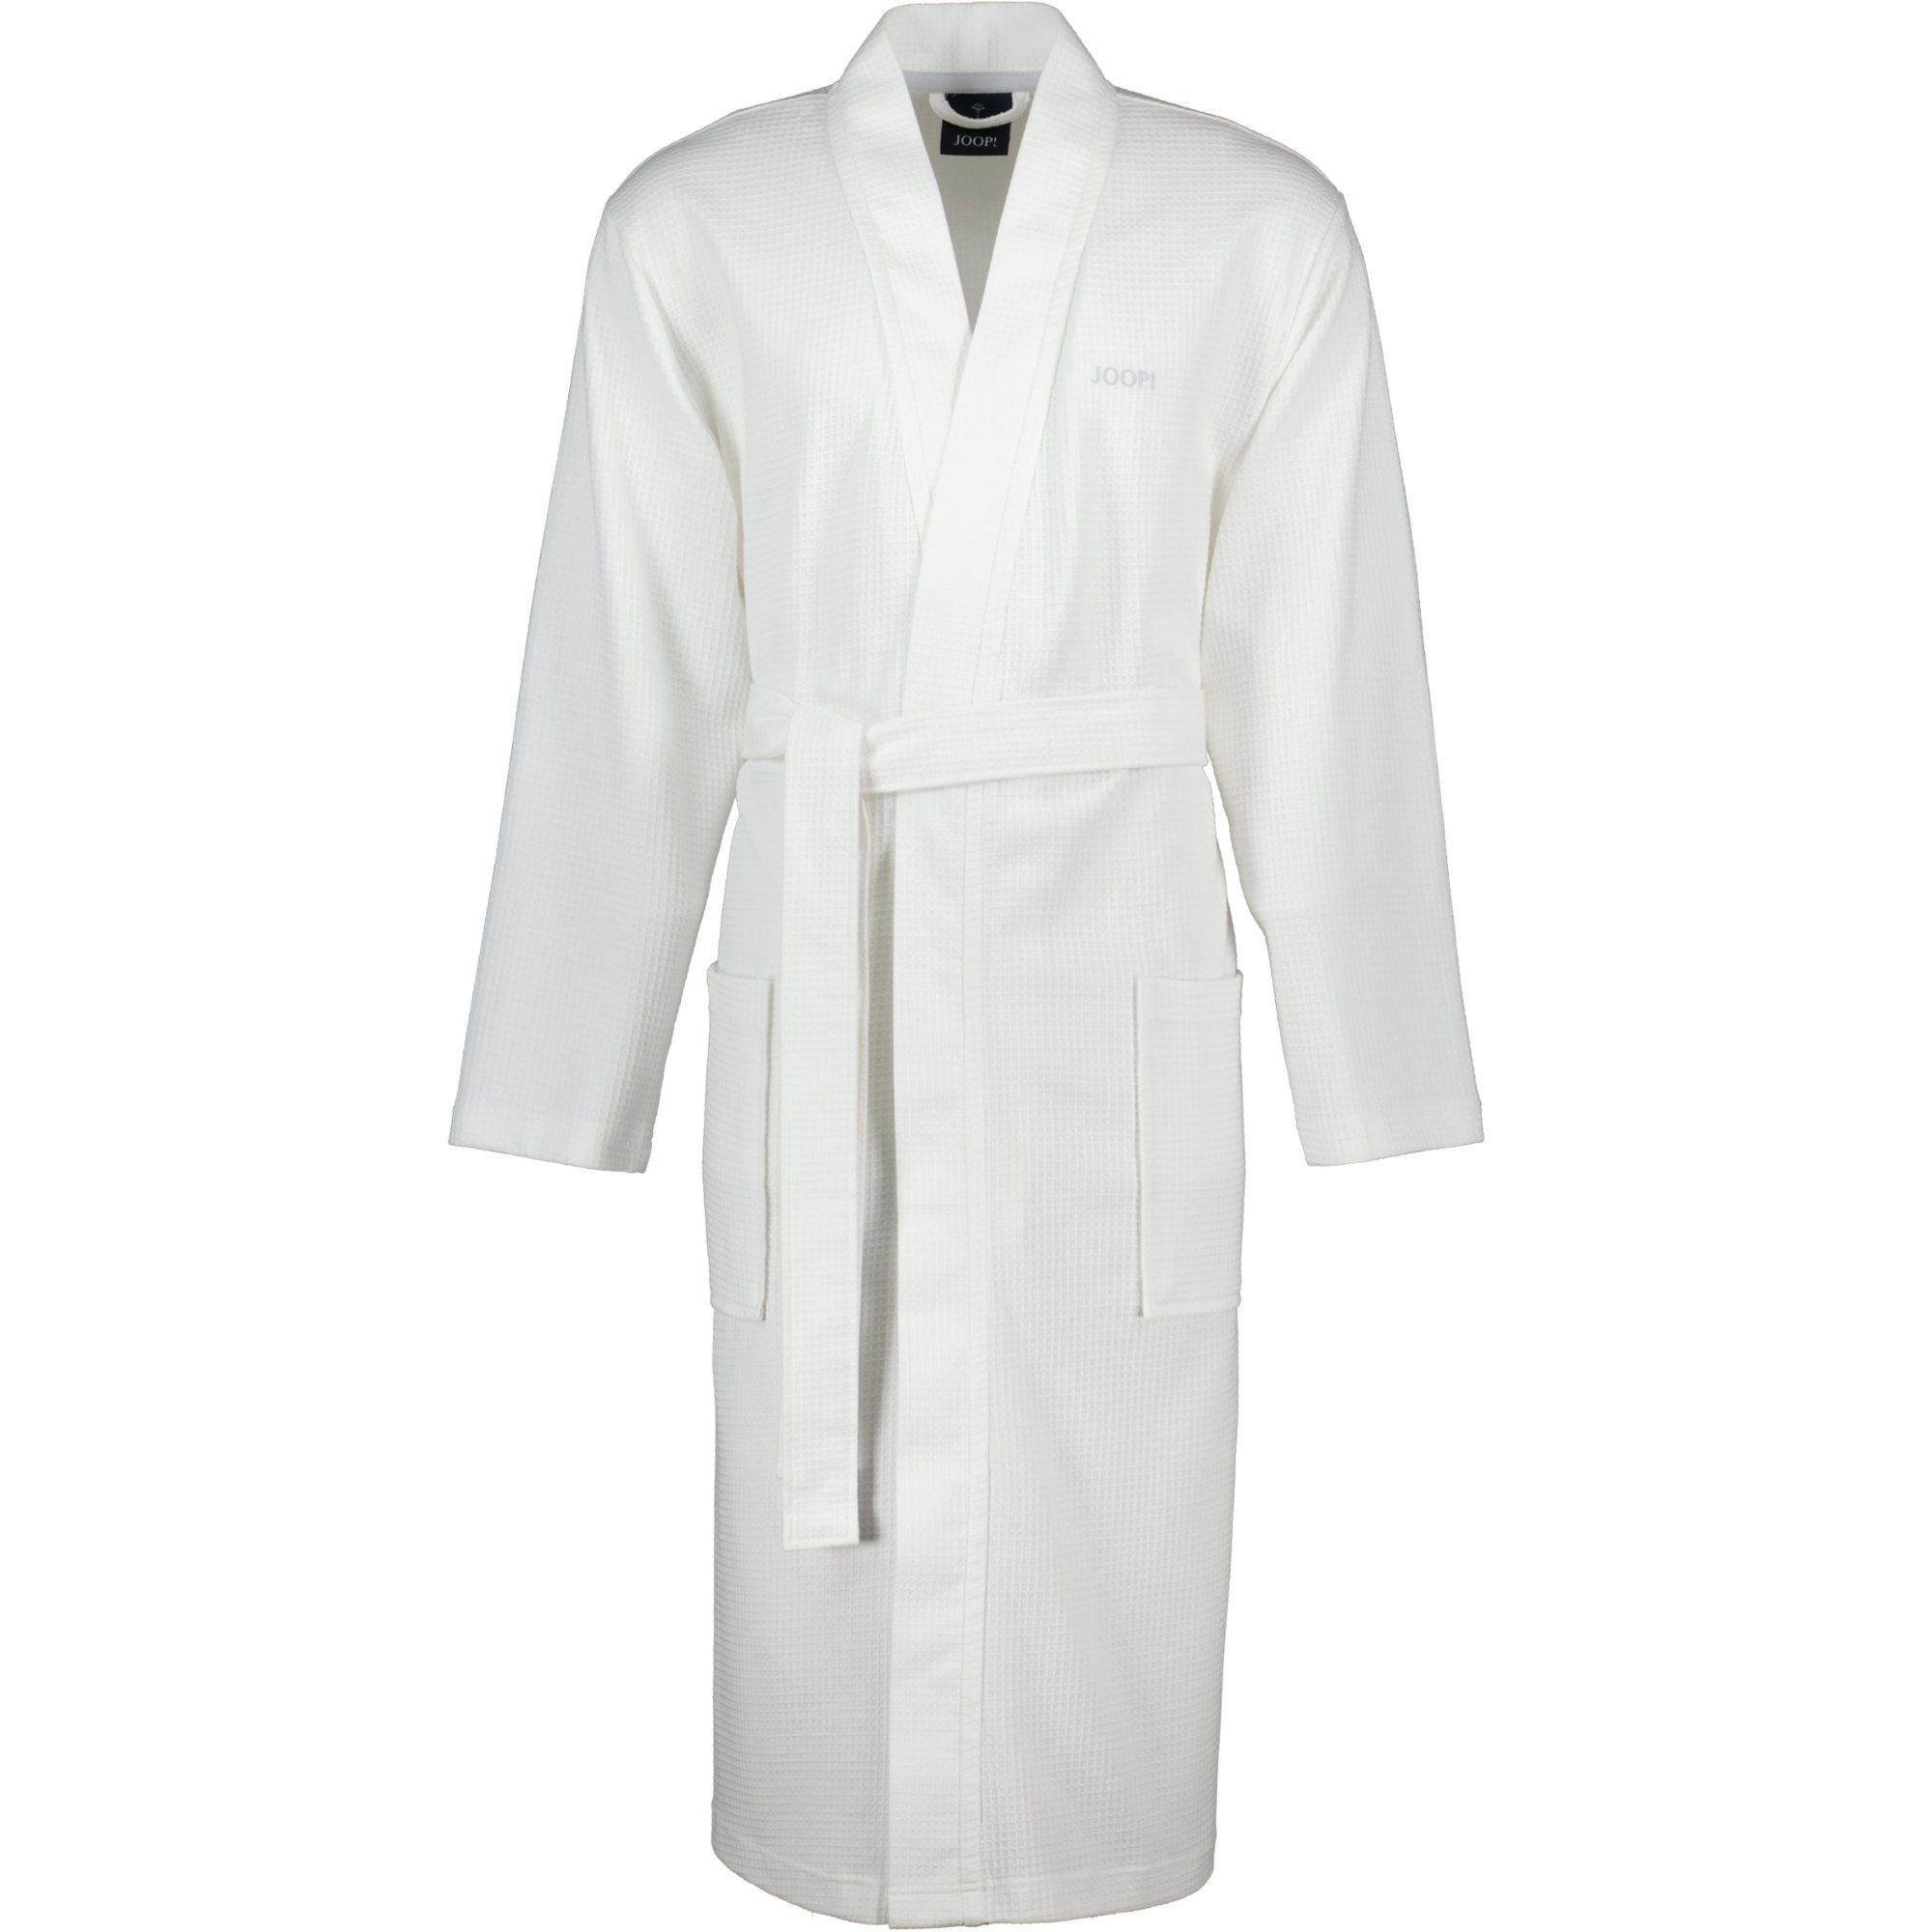 Joop! Herrenbademantel Pique 1656 Kimono Pique, Kimono, 100% Baumwolle Weiß